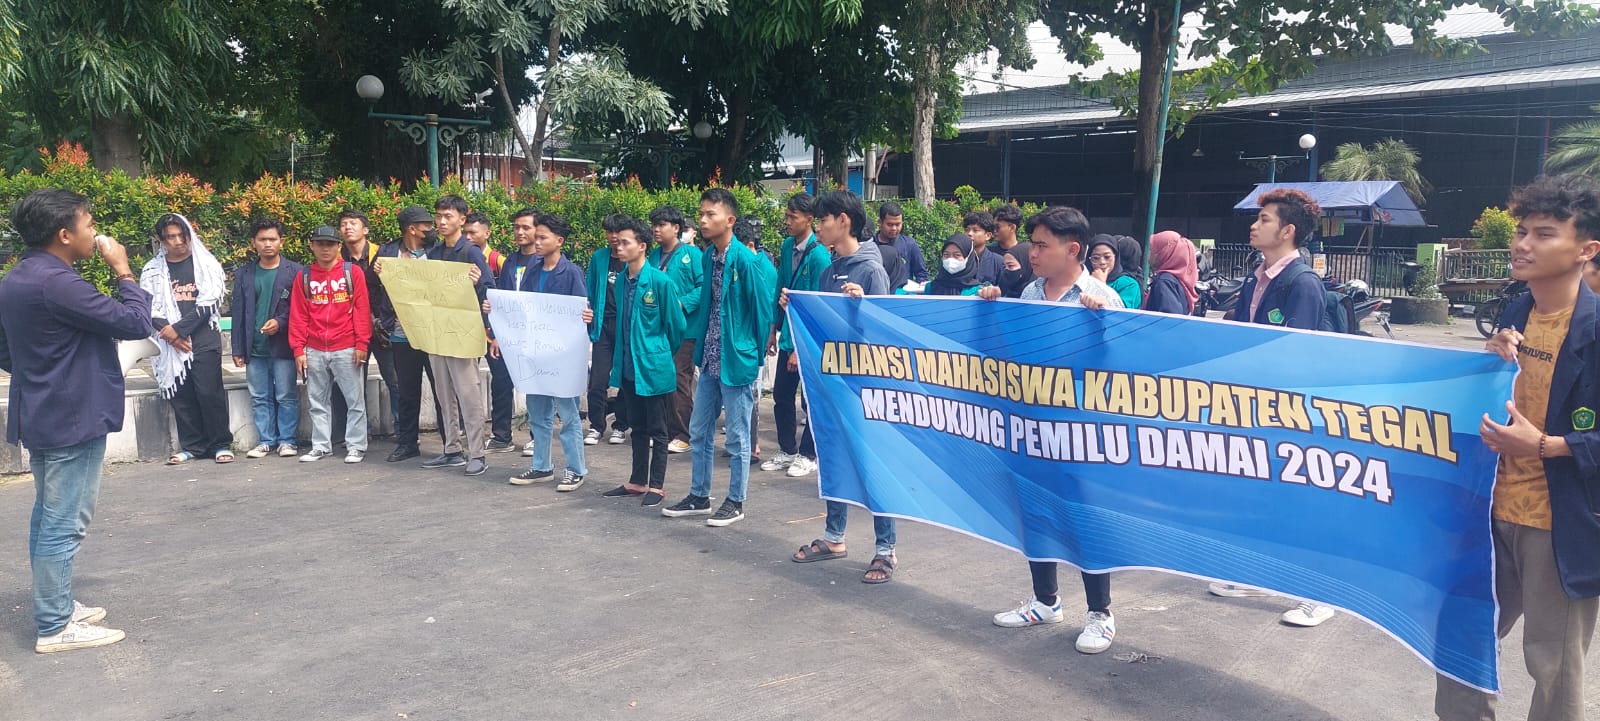 Suarakan Pemilu Damai, Aliansi Mahasiswa Kabupaten Tegal Aksi Turun ke Jalan